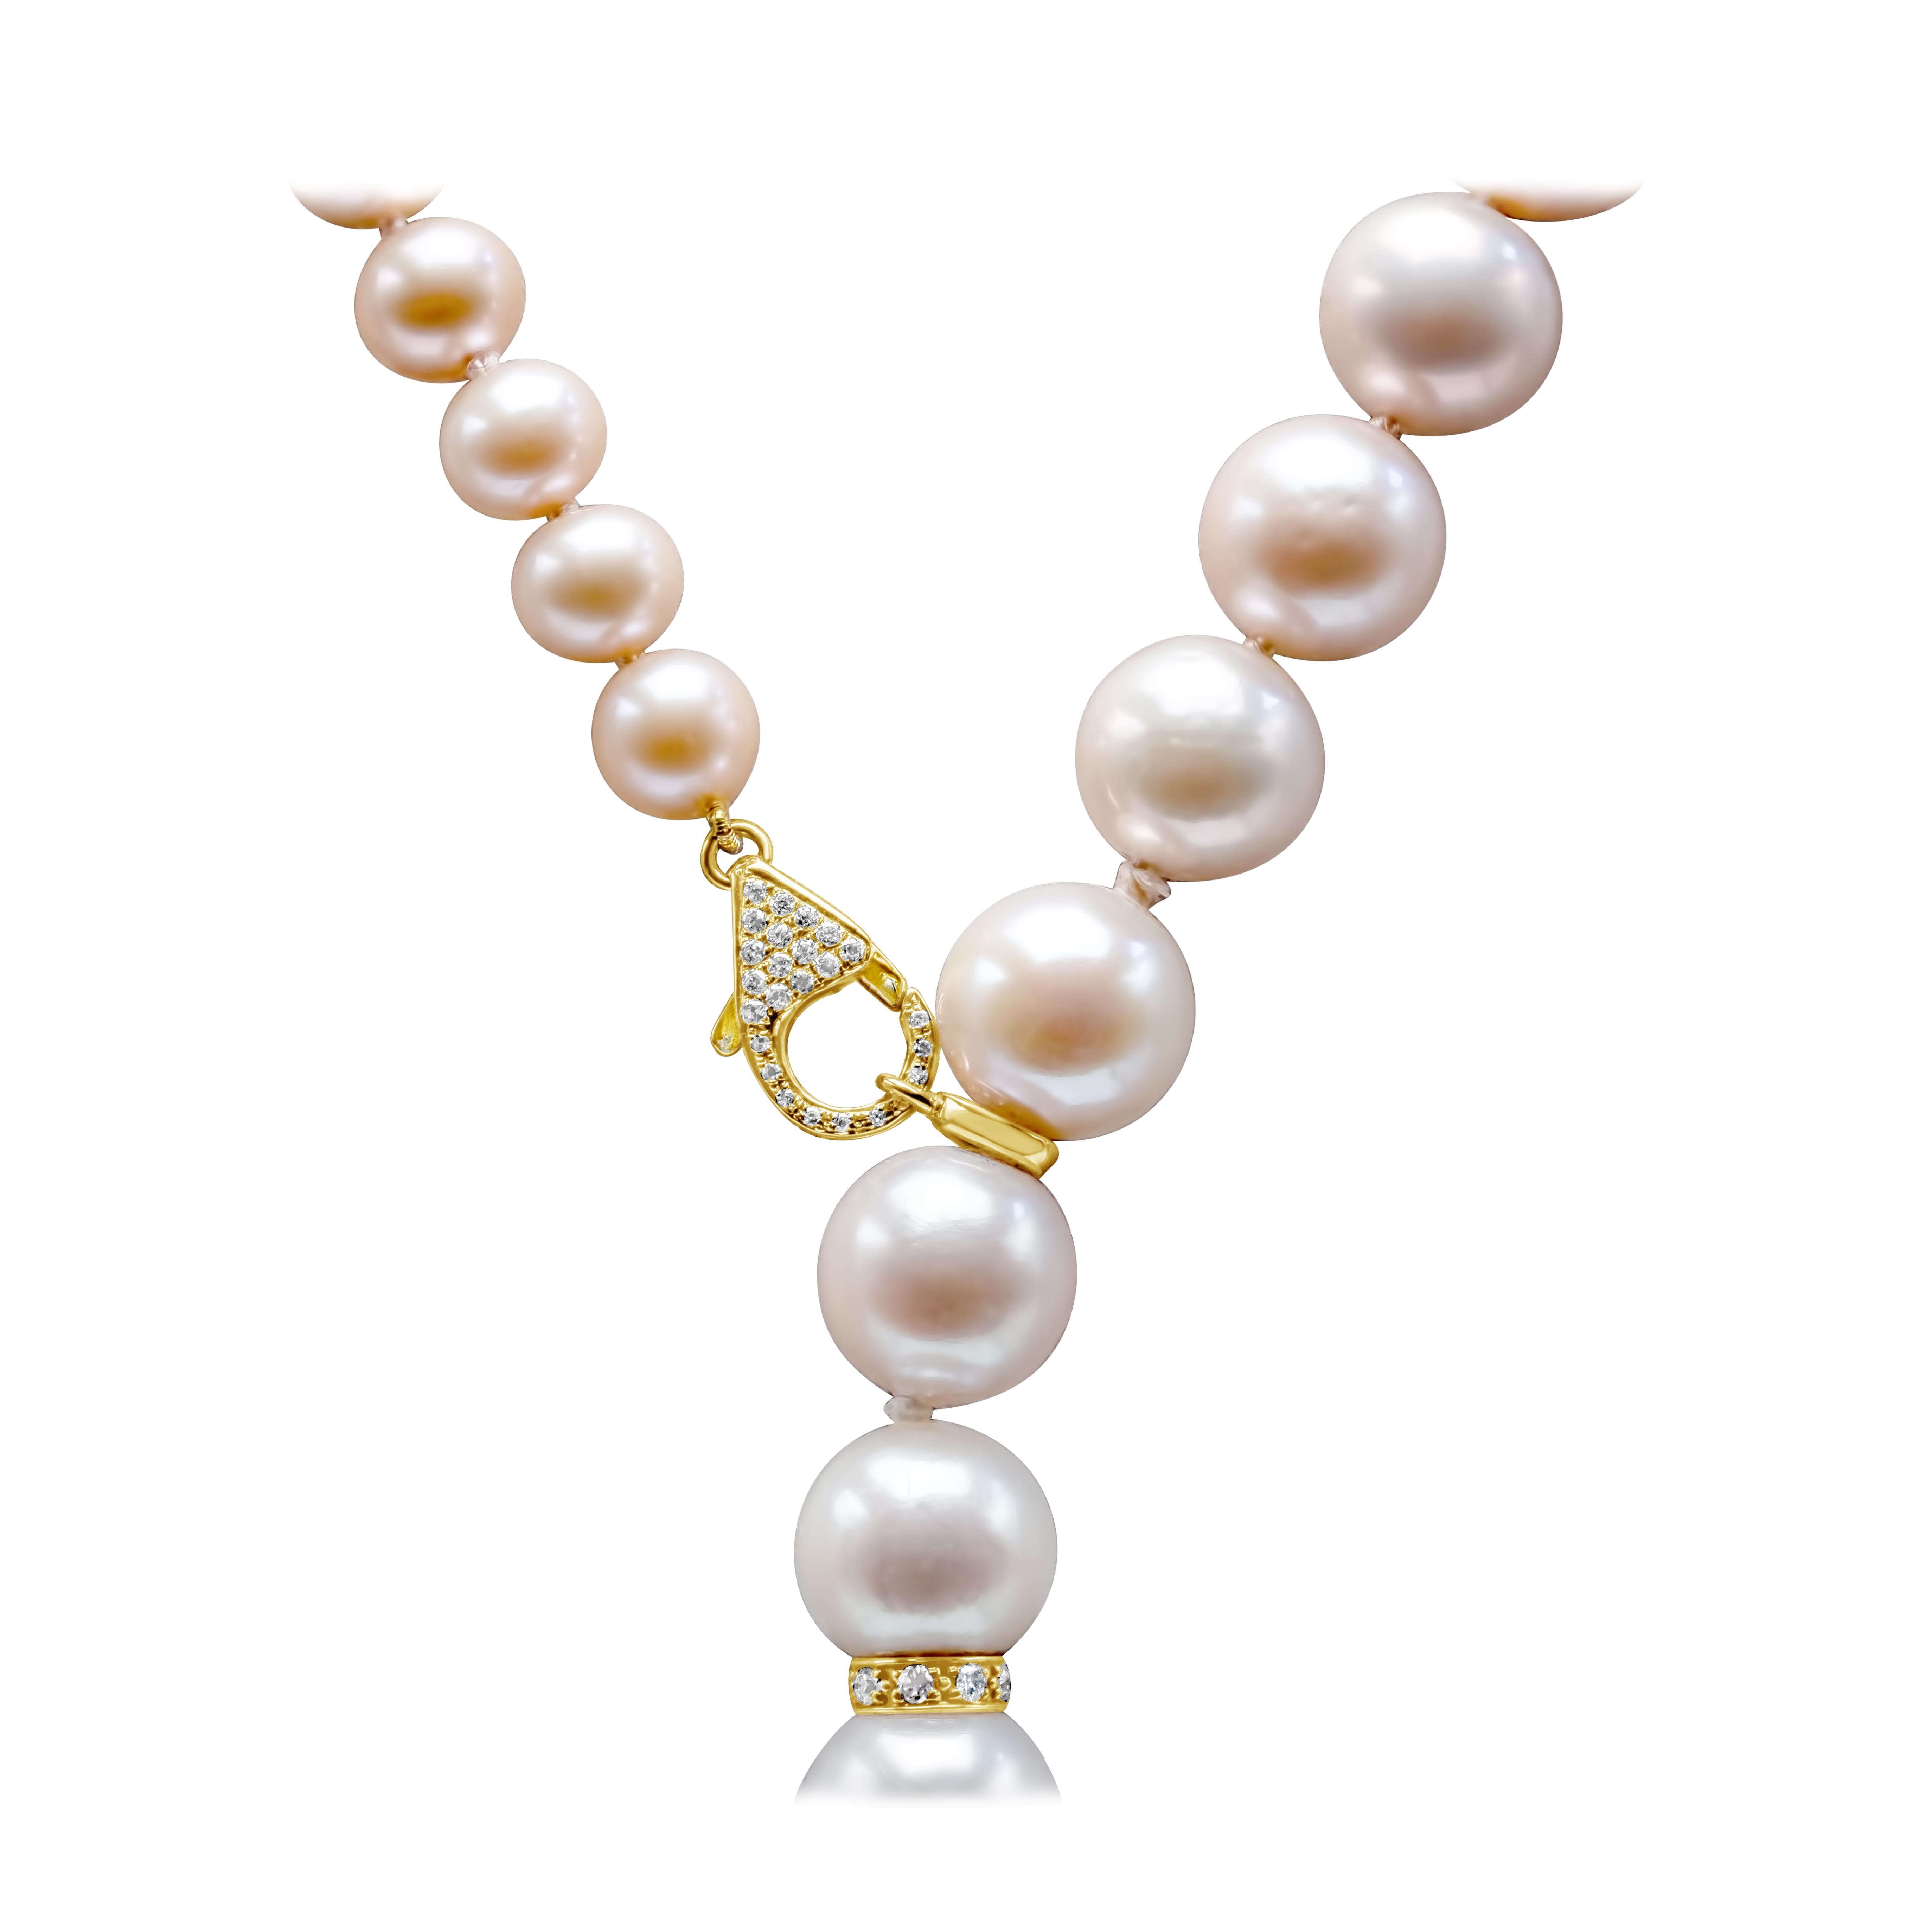 opera length necklace